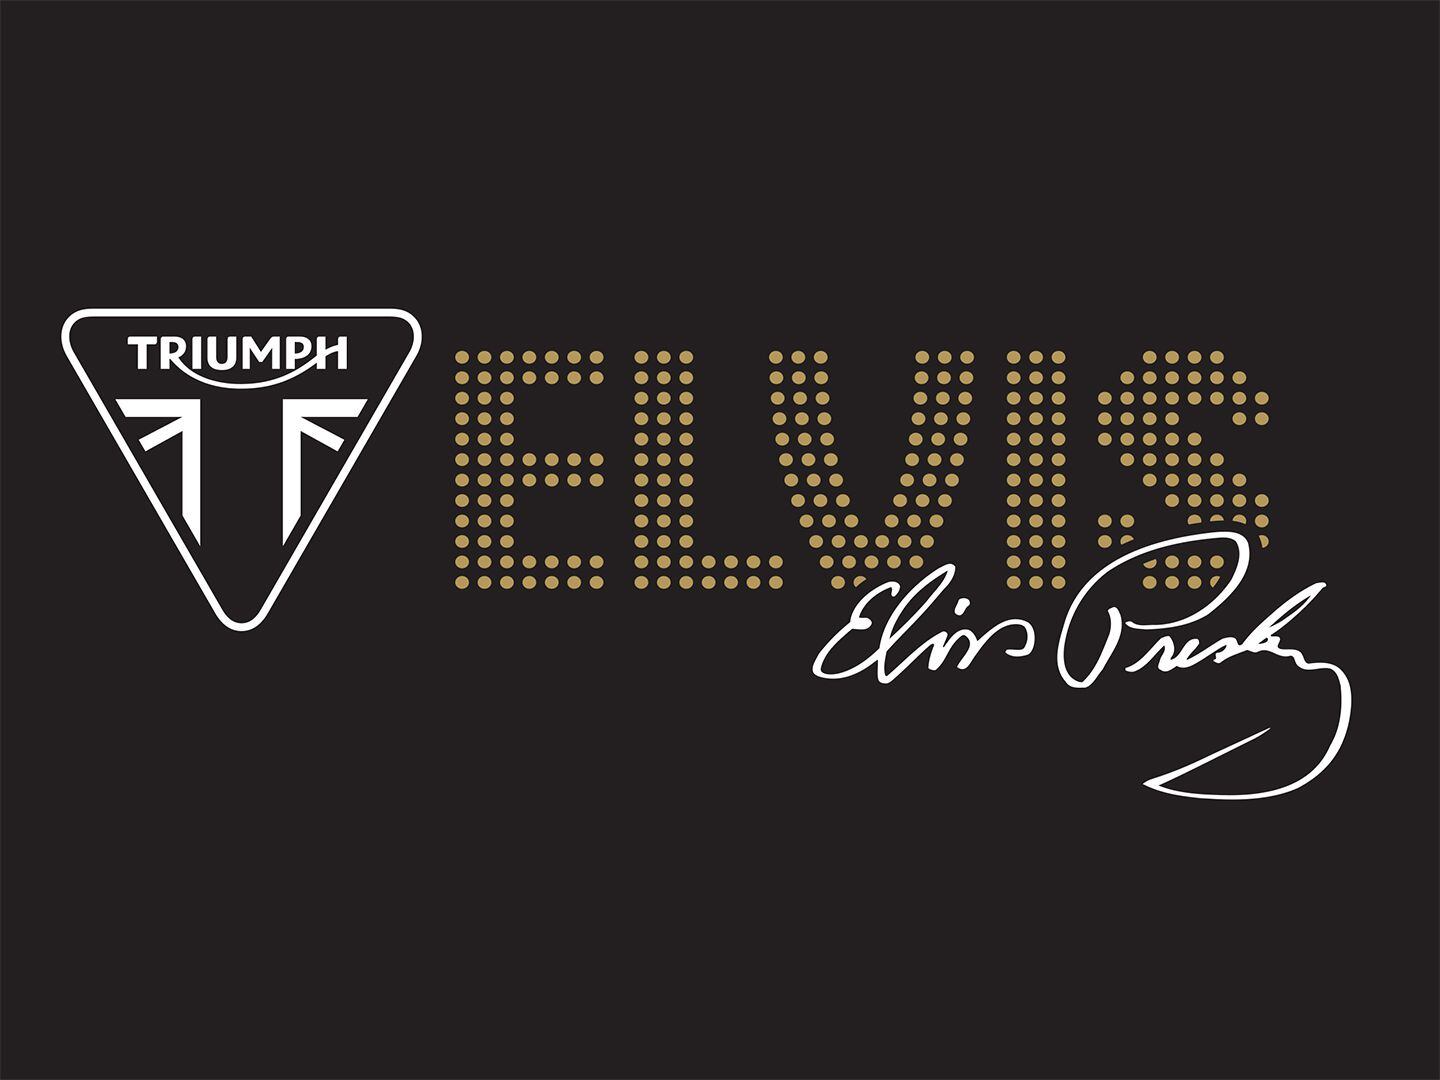 Triumph Motorcycles and Elvis Presley